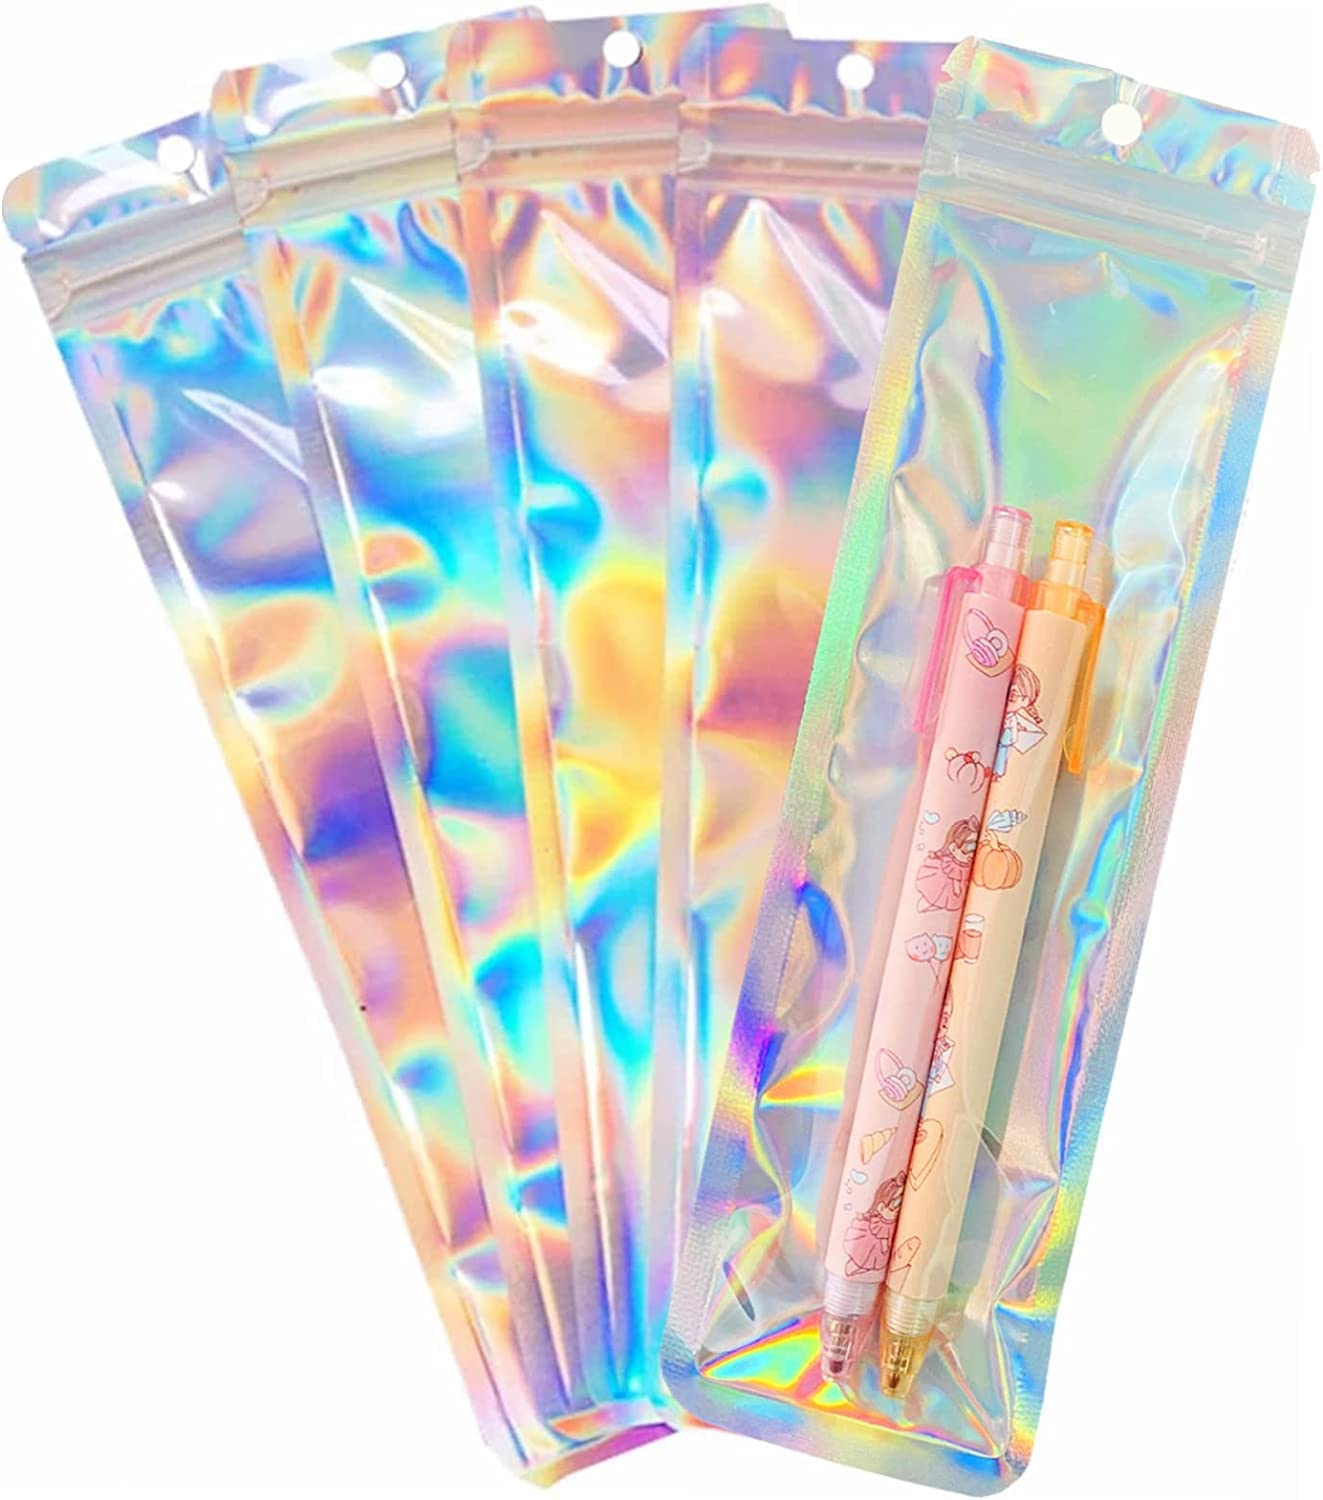 Holographic Pen Bags Ziploc